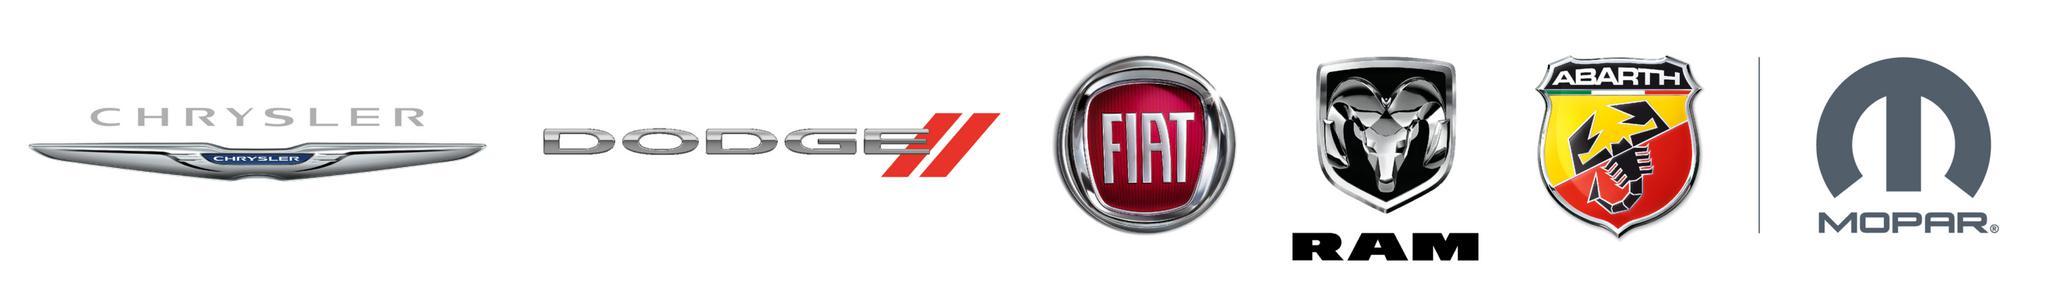 Fiat-Chrysler Logo - Fiat Chrysler Automobiles International Motor Show 2019